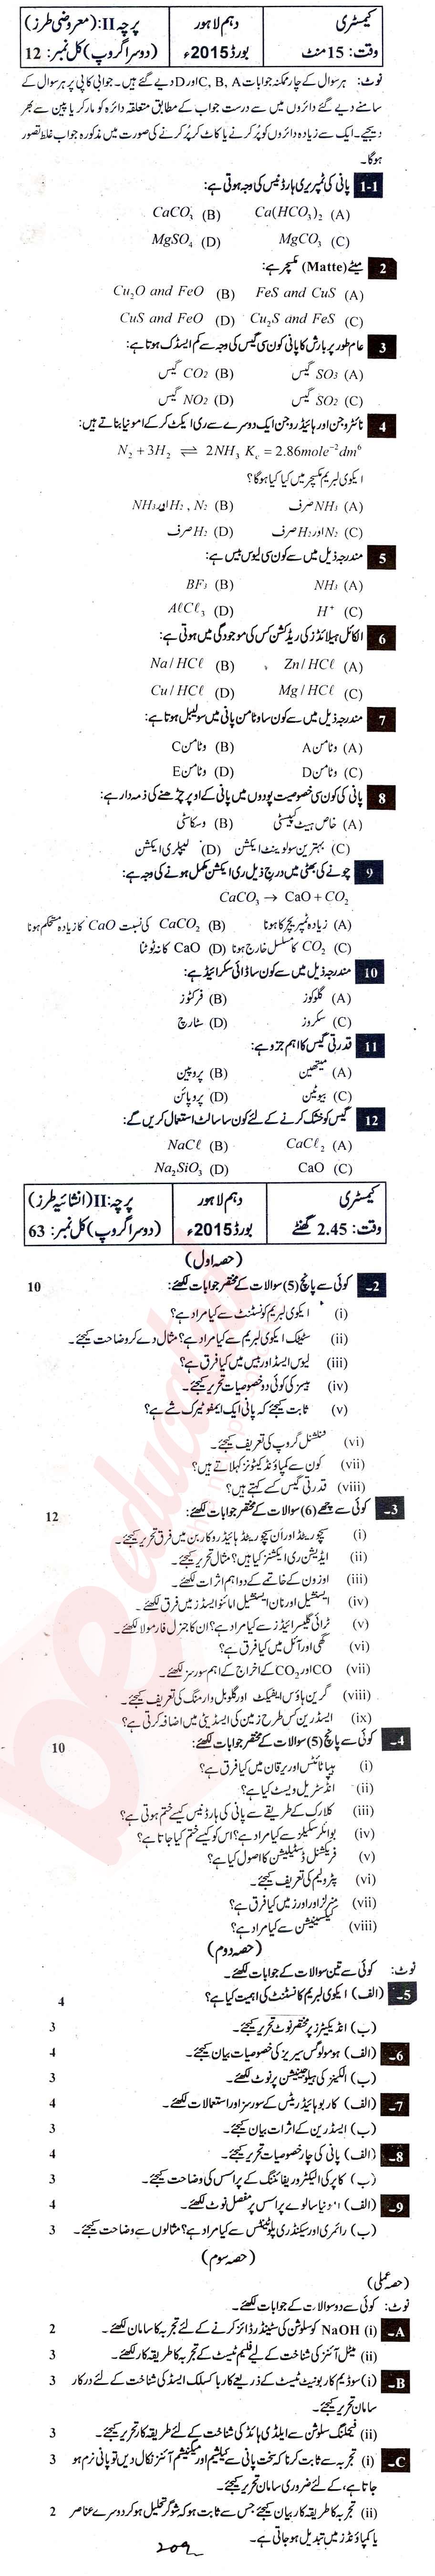 Chemistry 10th Urdu Medium Past Paper Group 2 BISE Lahore 2015